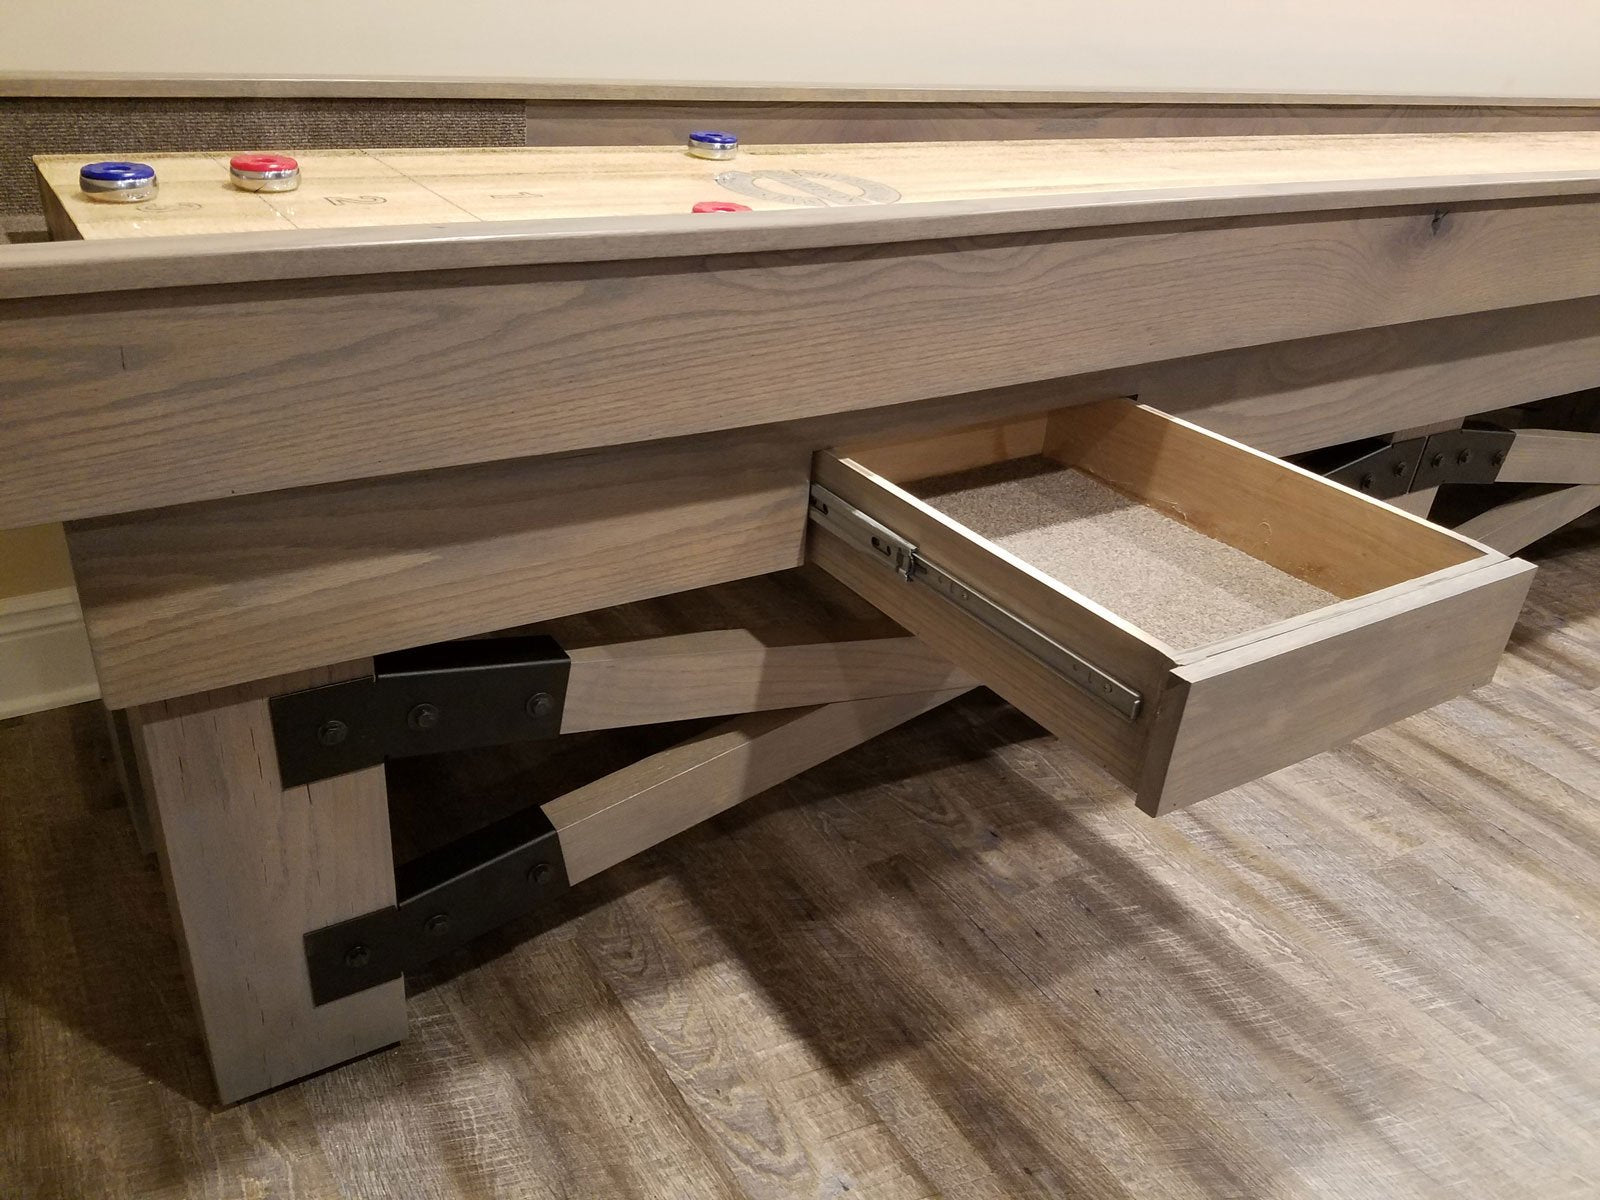 Custom Retro Champion Rustic 18' Shuffleboard Table